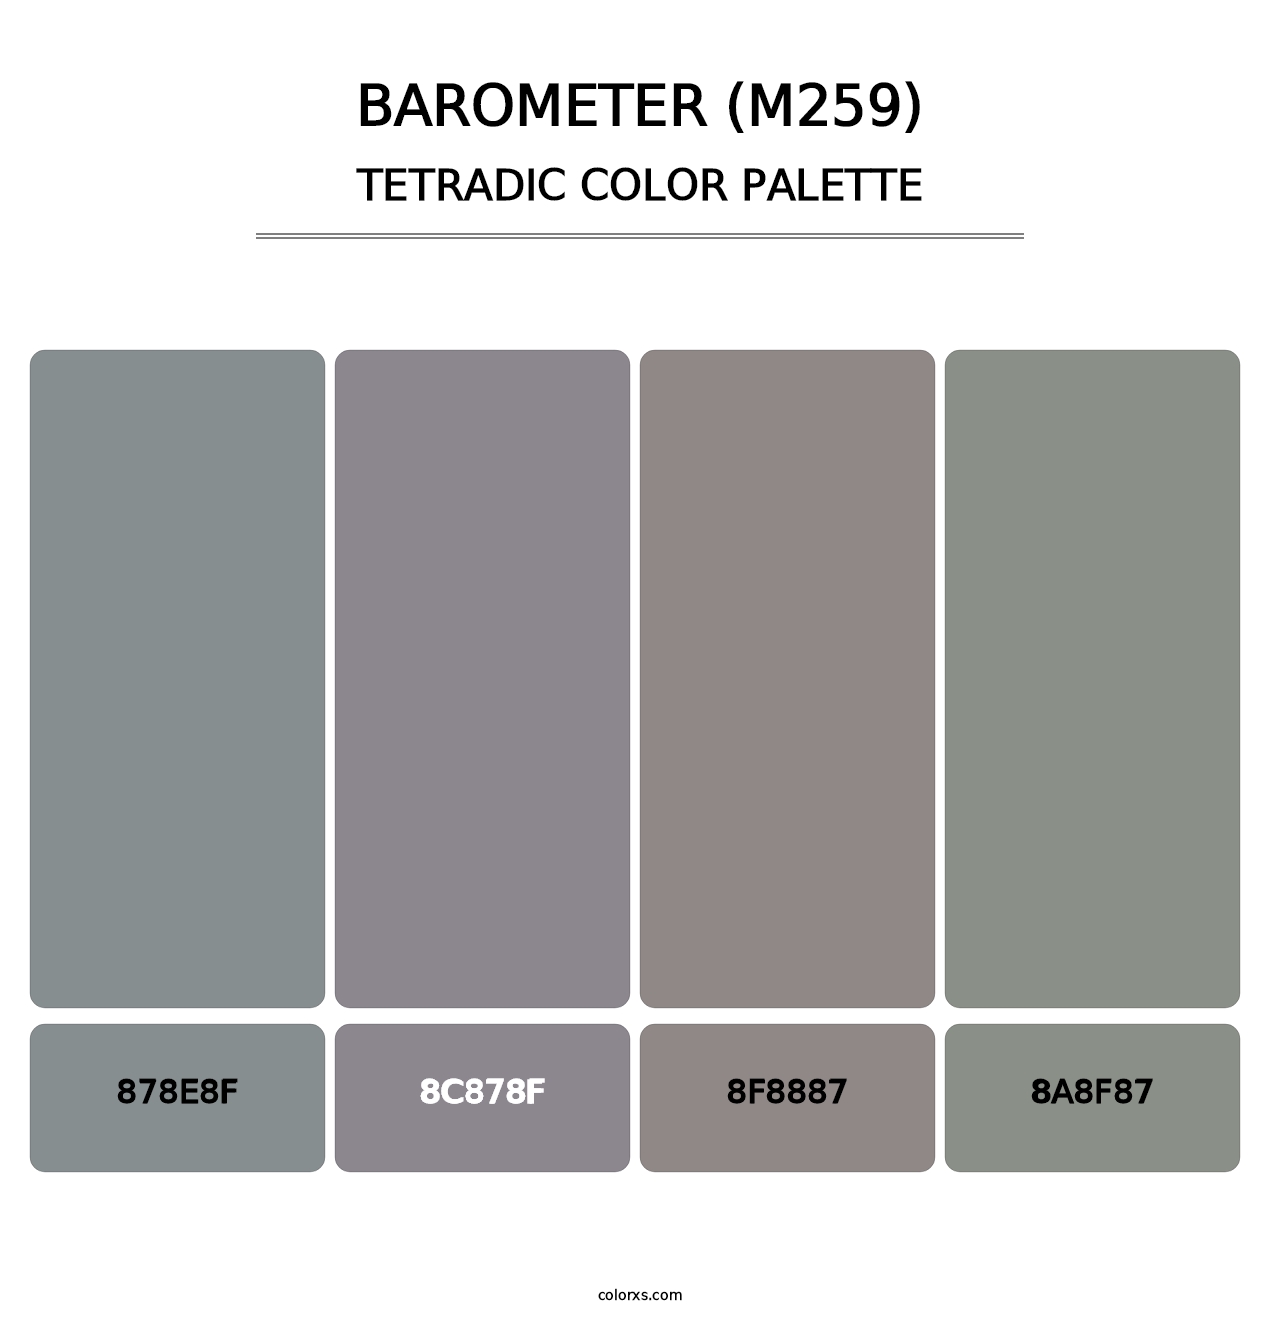 Barometer (M259) - Tetradic Color Palette